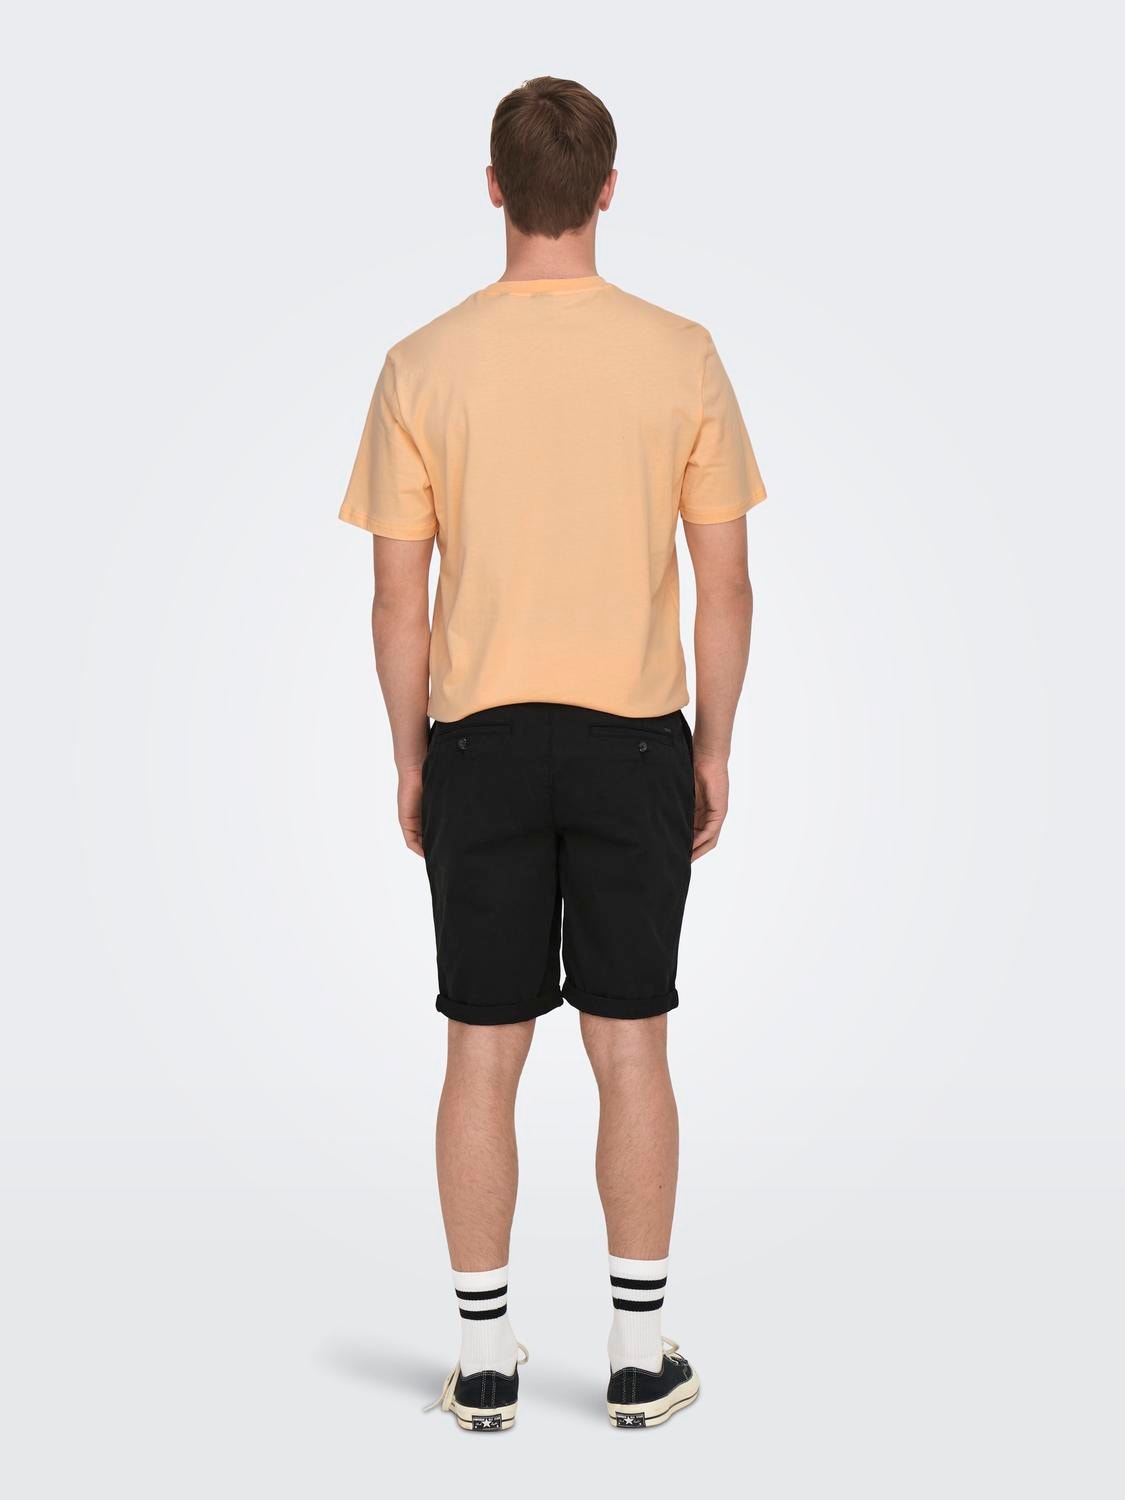 ONLY & SONS Regular Fit Shorts -Black - 22024481